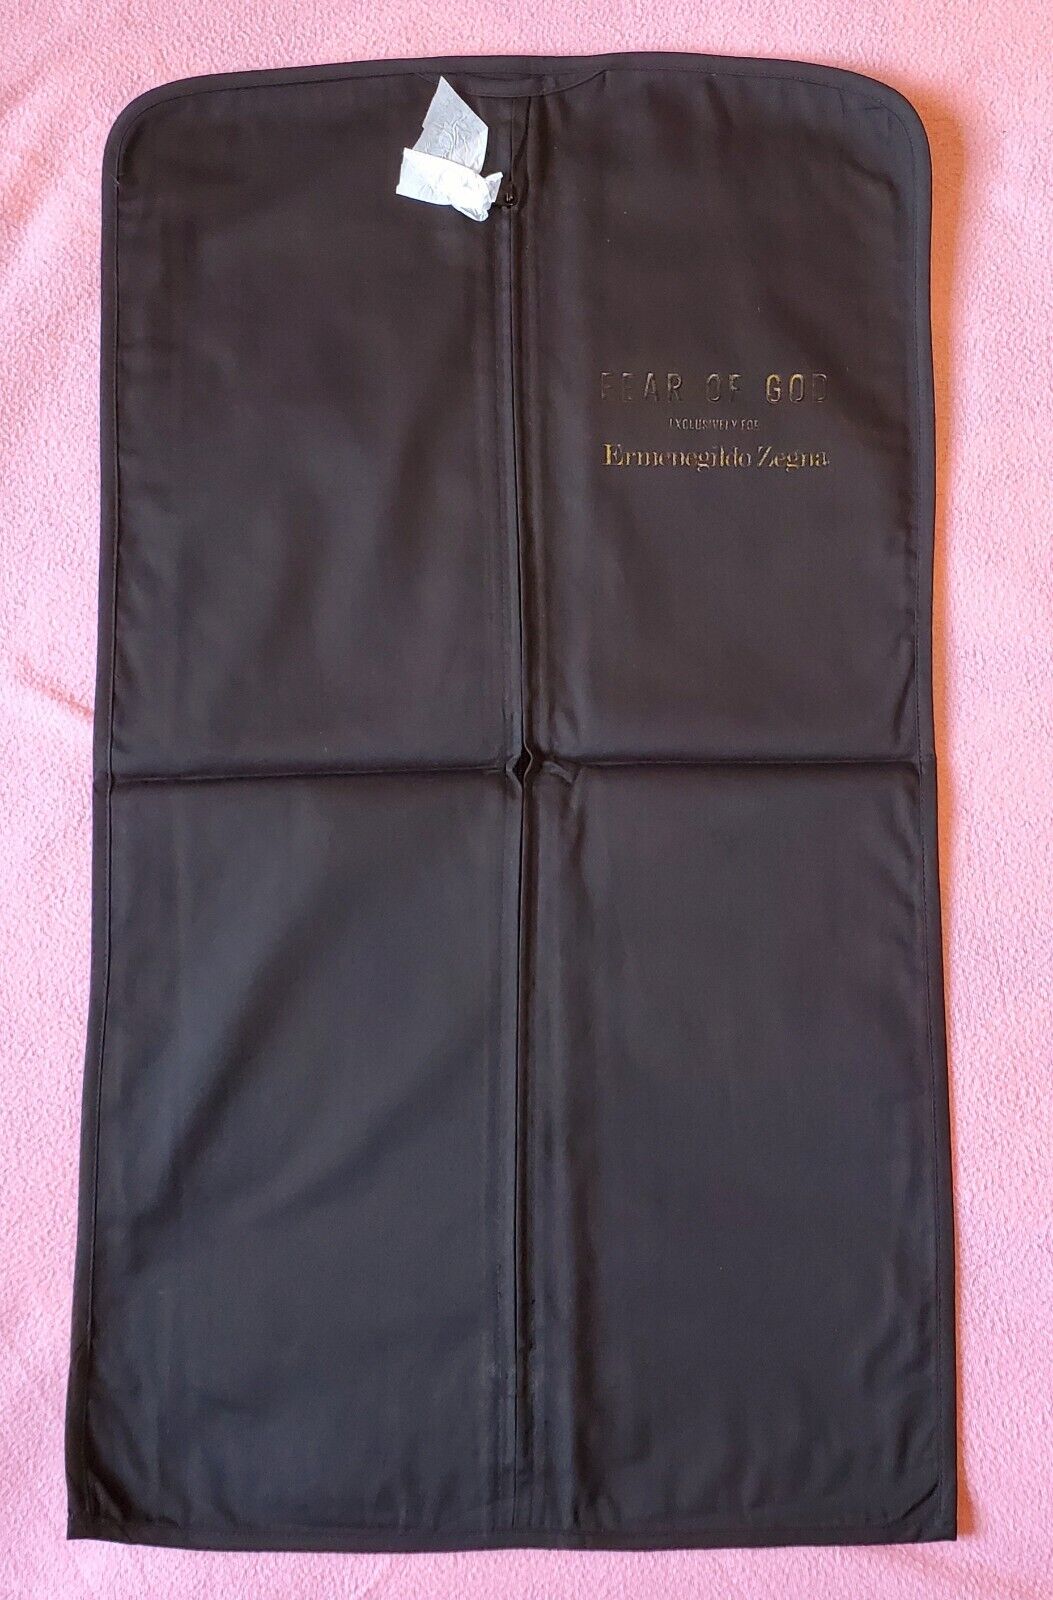 New Ermenegildo Zegna - "fear Of God" Black Zippered Garment Bag - 31" X 17"